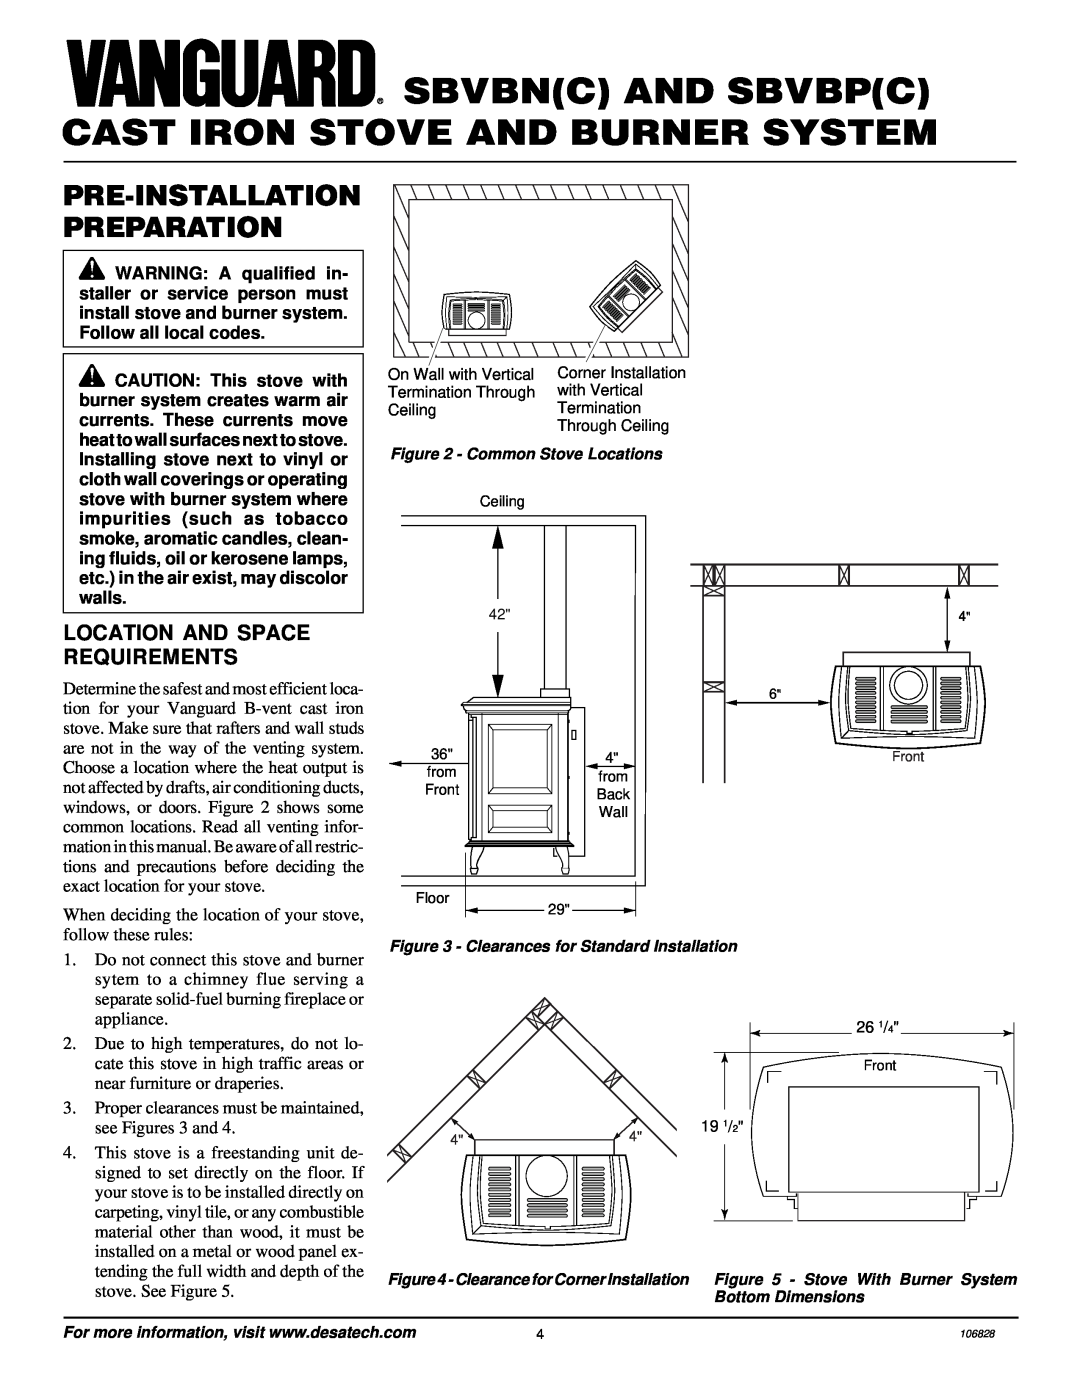 Vanguard Heating SBVBN(C), SBVBP(C) installation manual Pre-Installation Preparation, Location And Space Requirements 